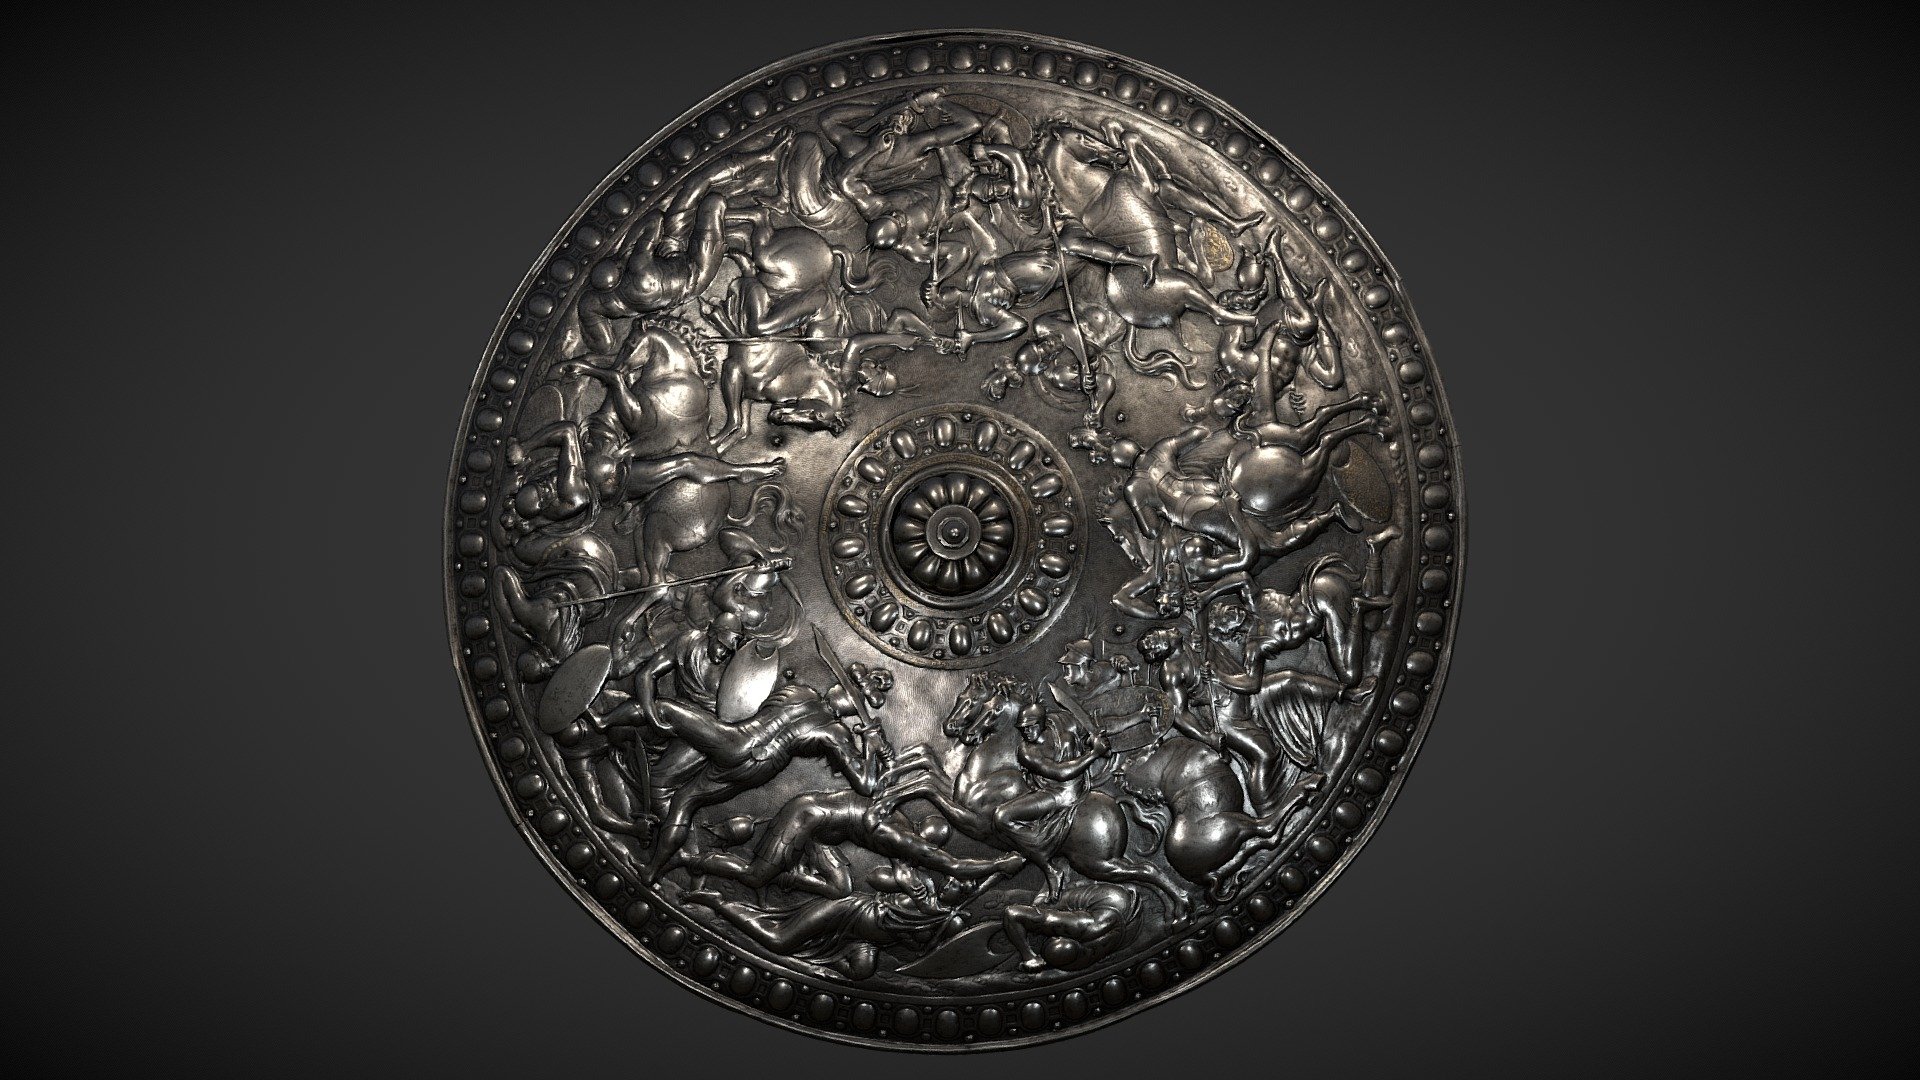 The Parade Shield of King Erik XIV of Sweden